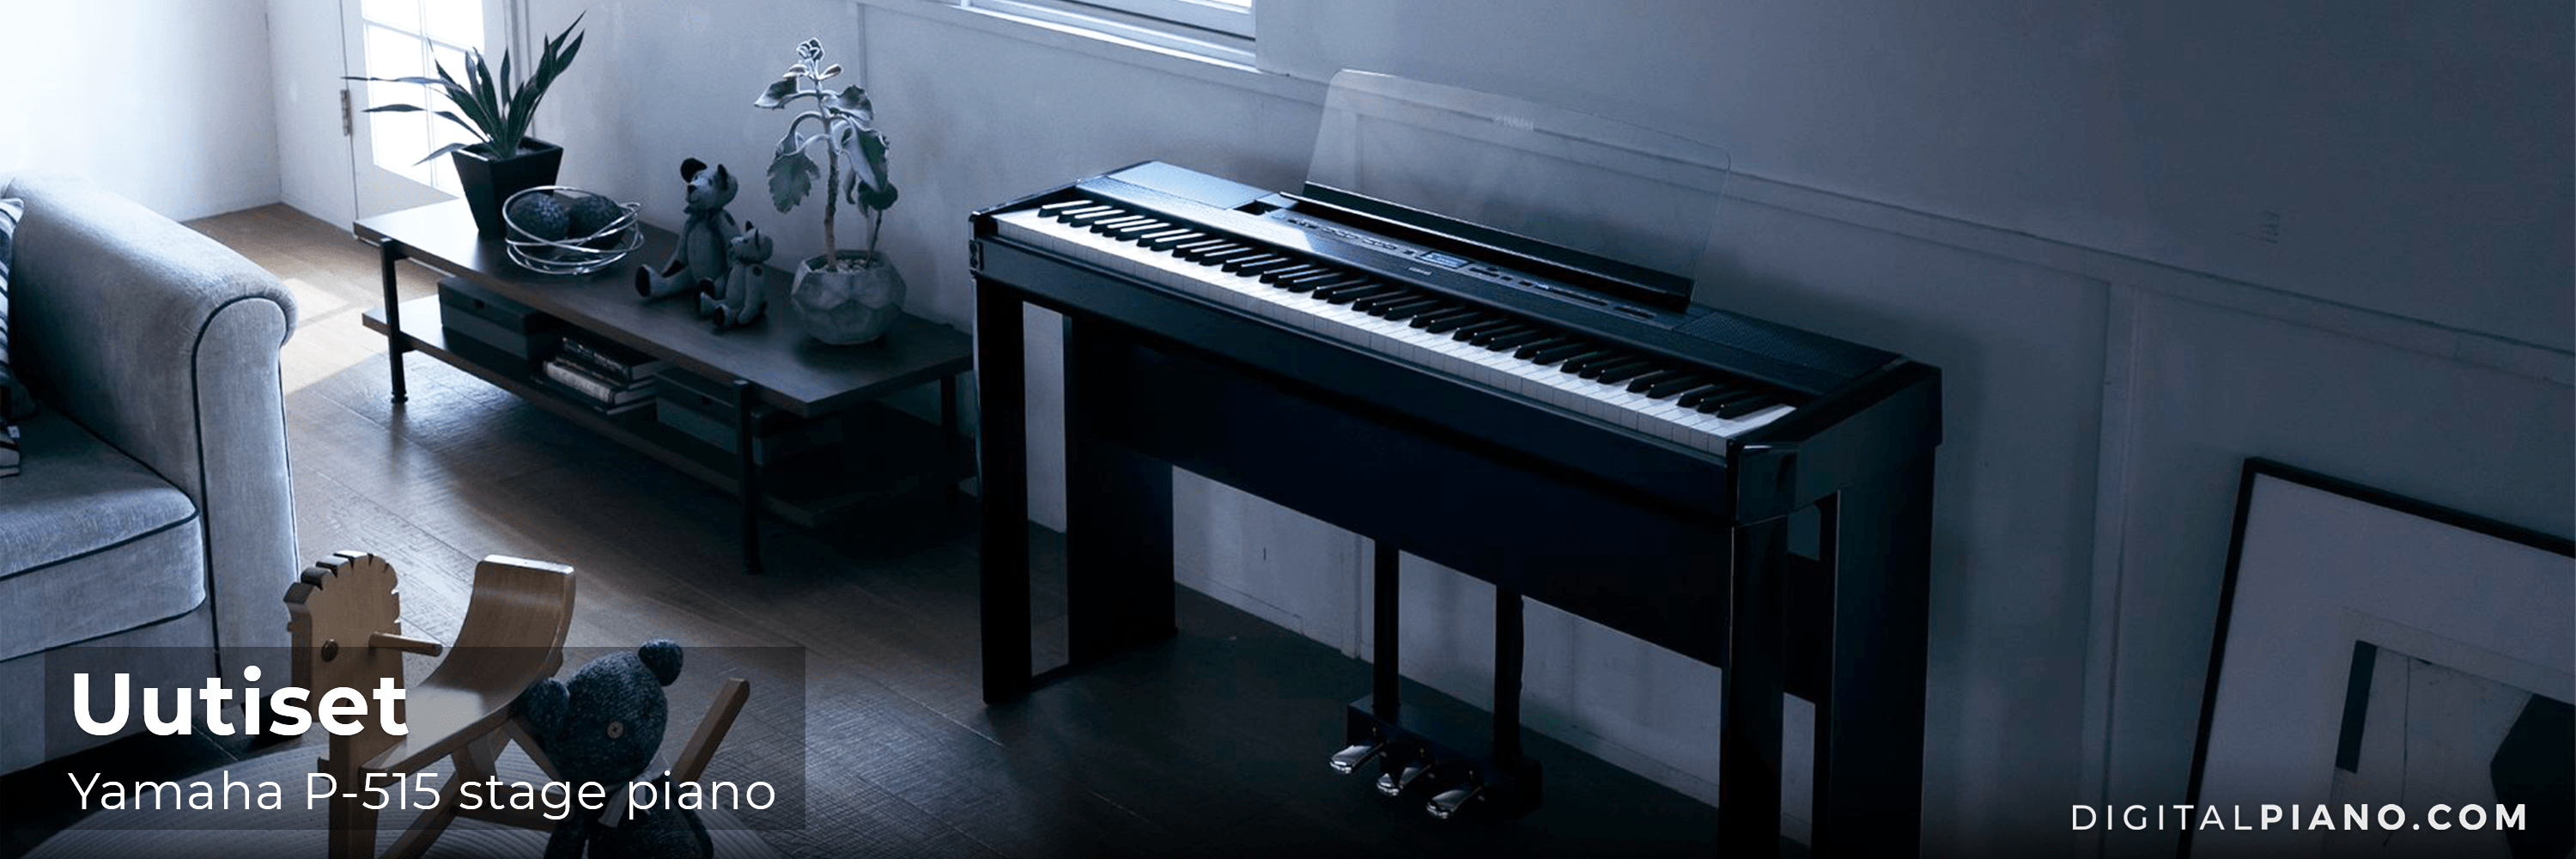 Uutiset - Yamaha P-515 stage piano